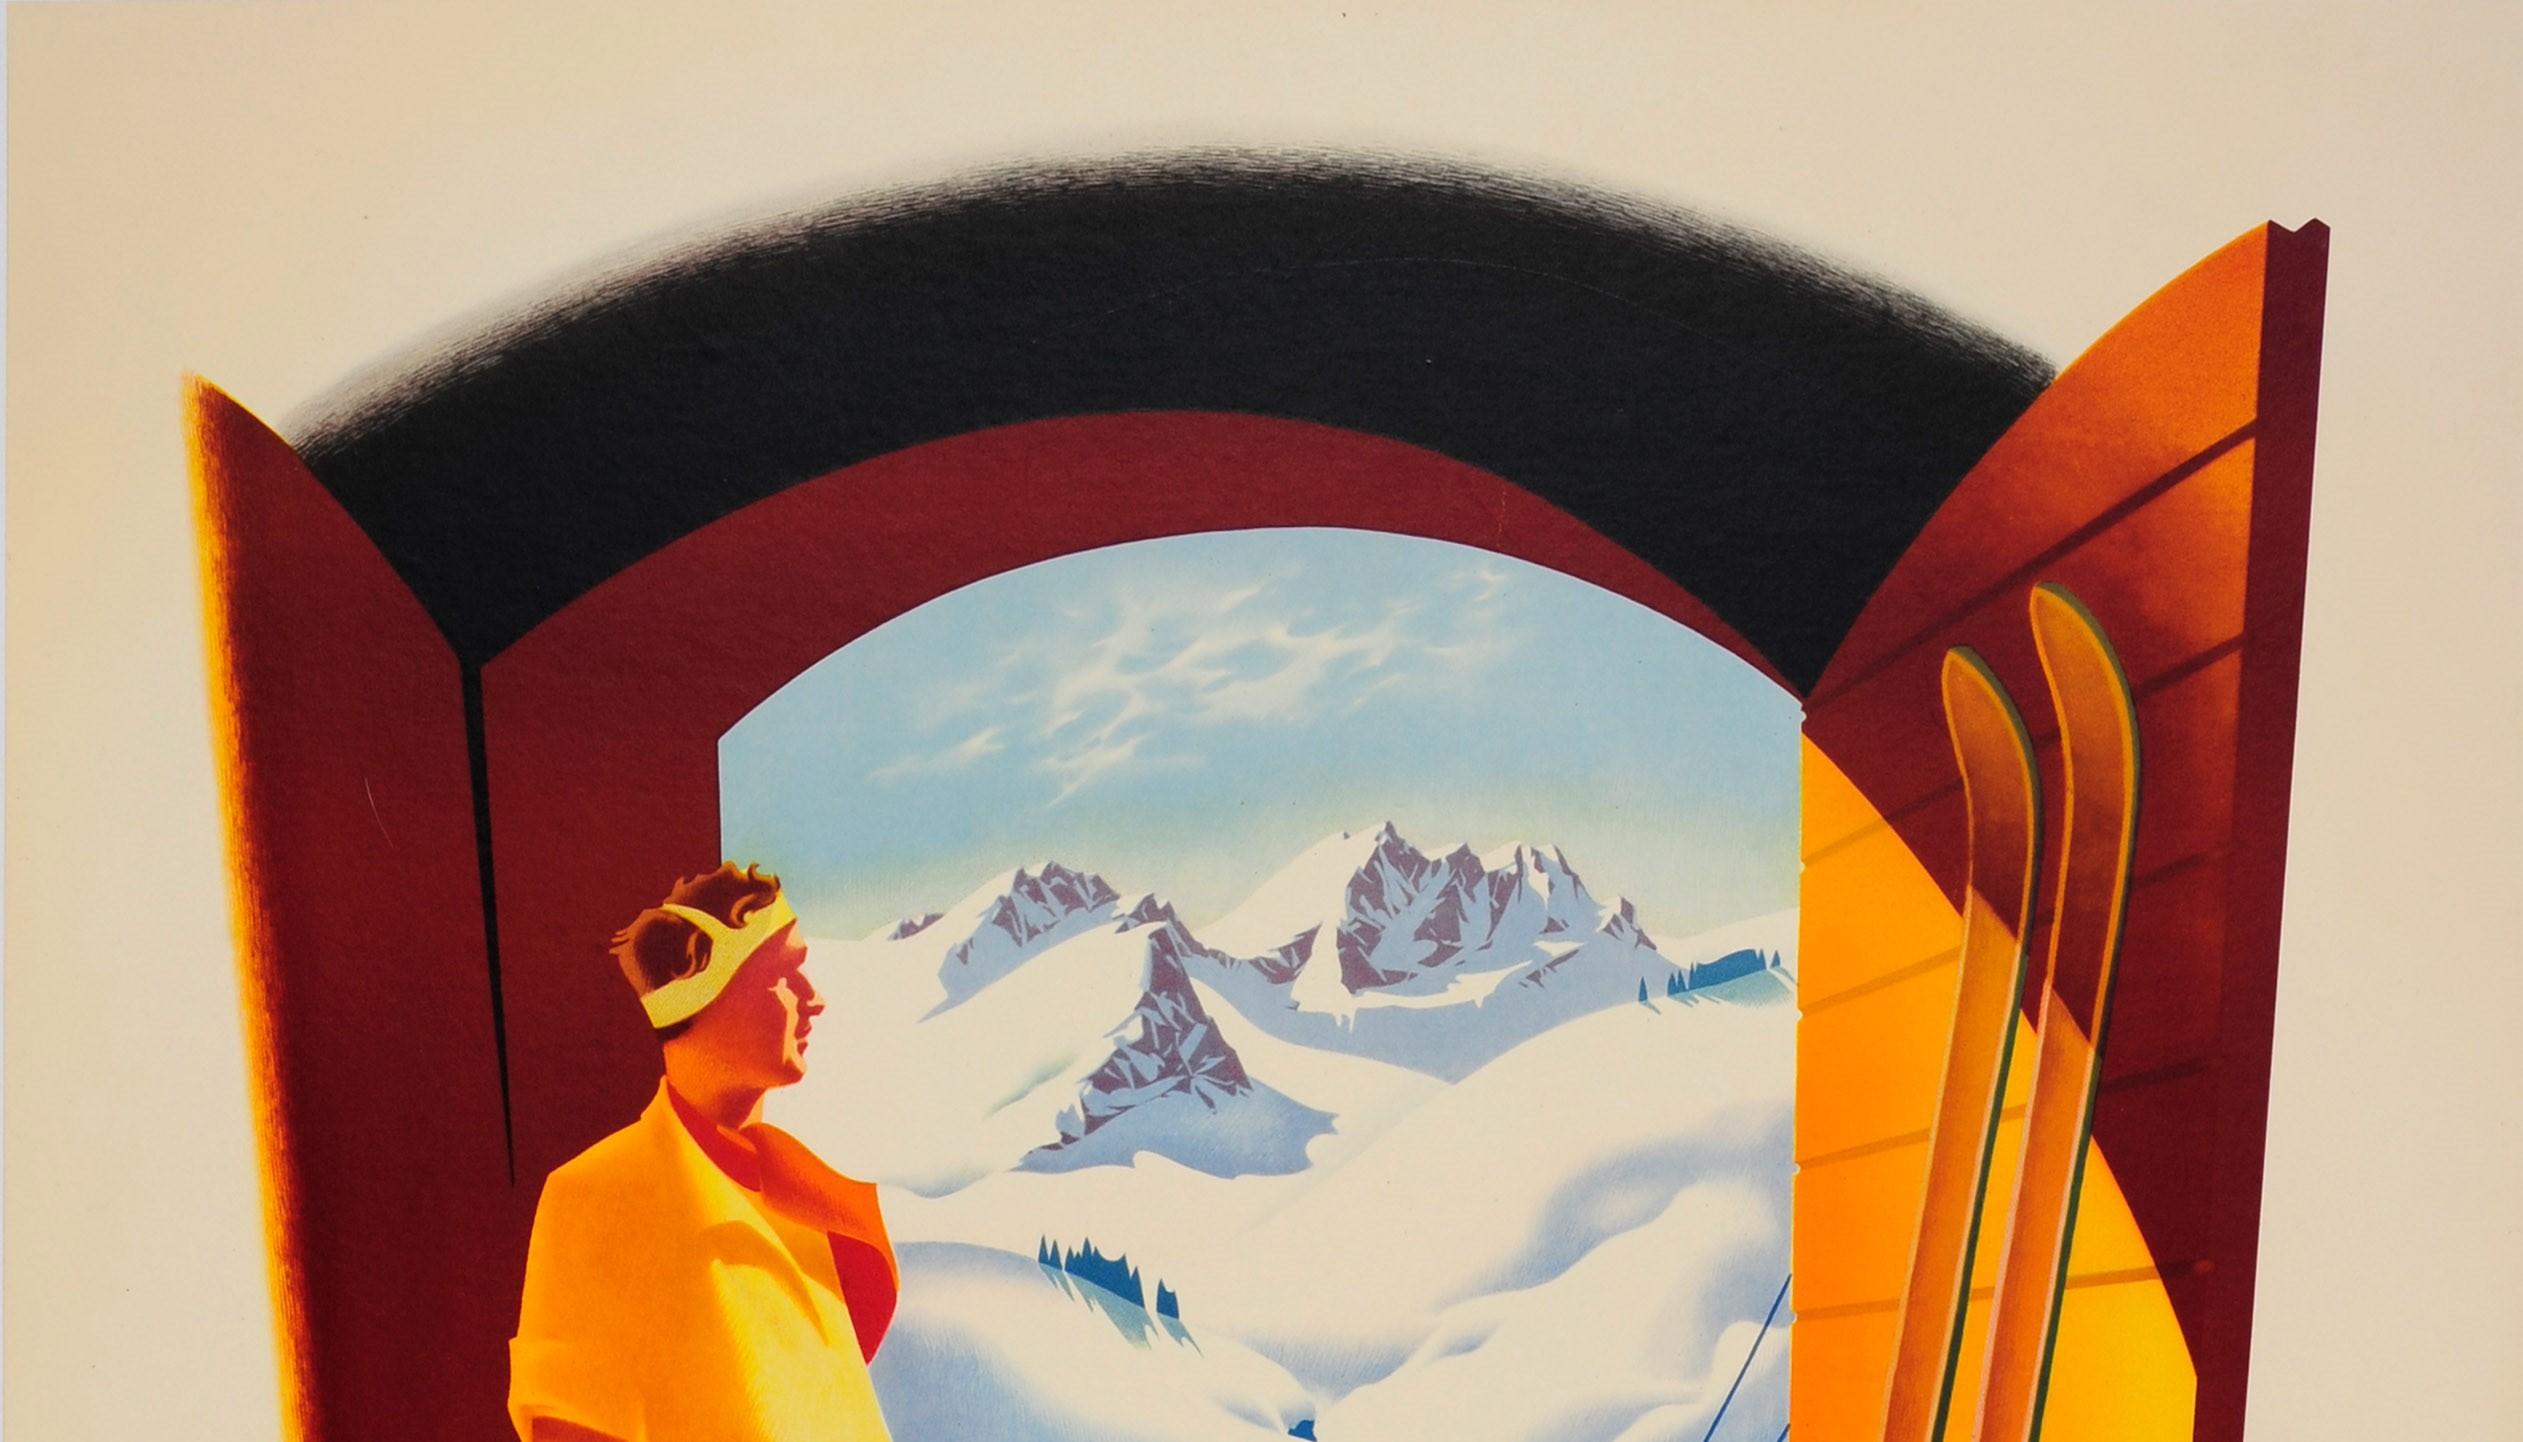 Original Vintage Austria Winter Sport & Skiing Travel Poster Skier Mountain View - Print by A. Ebner